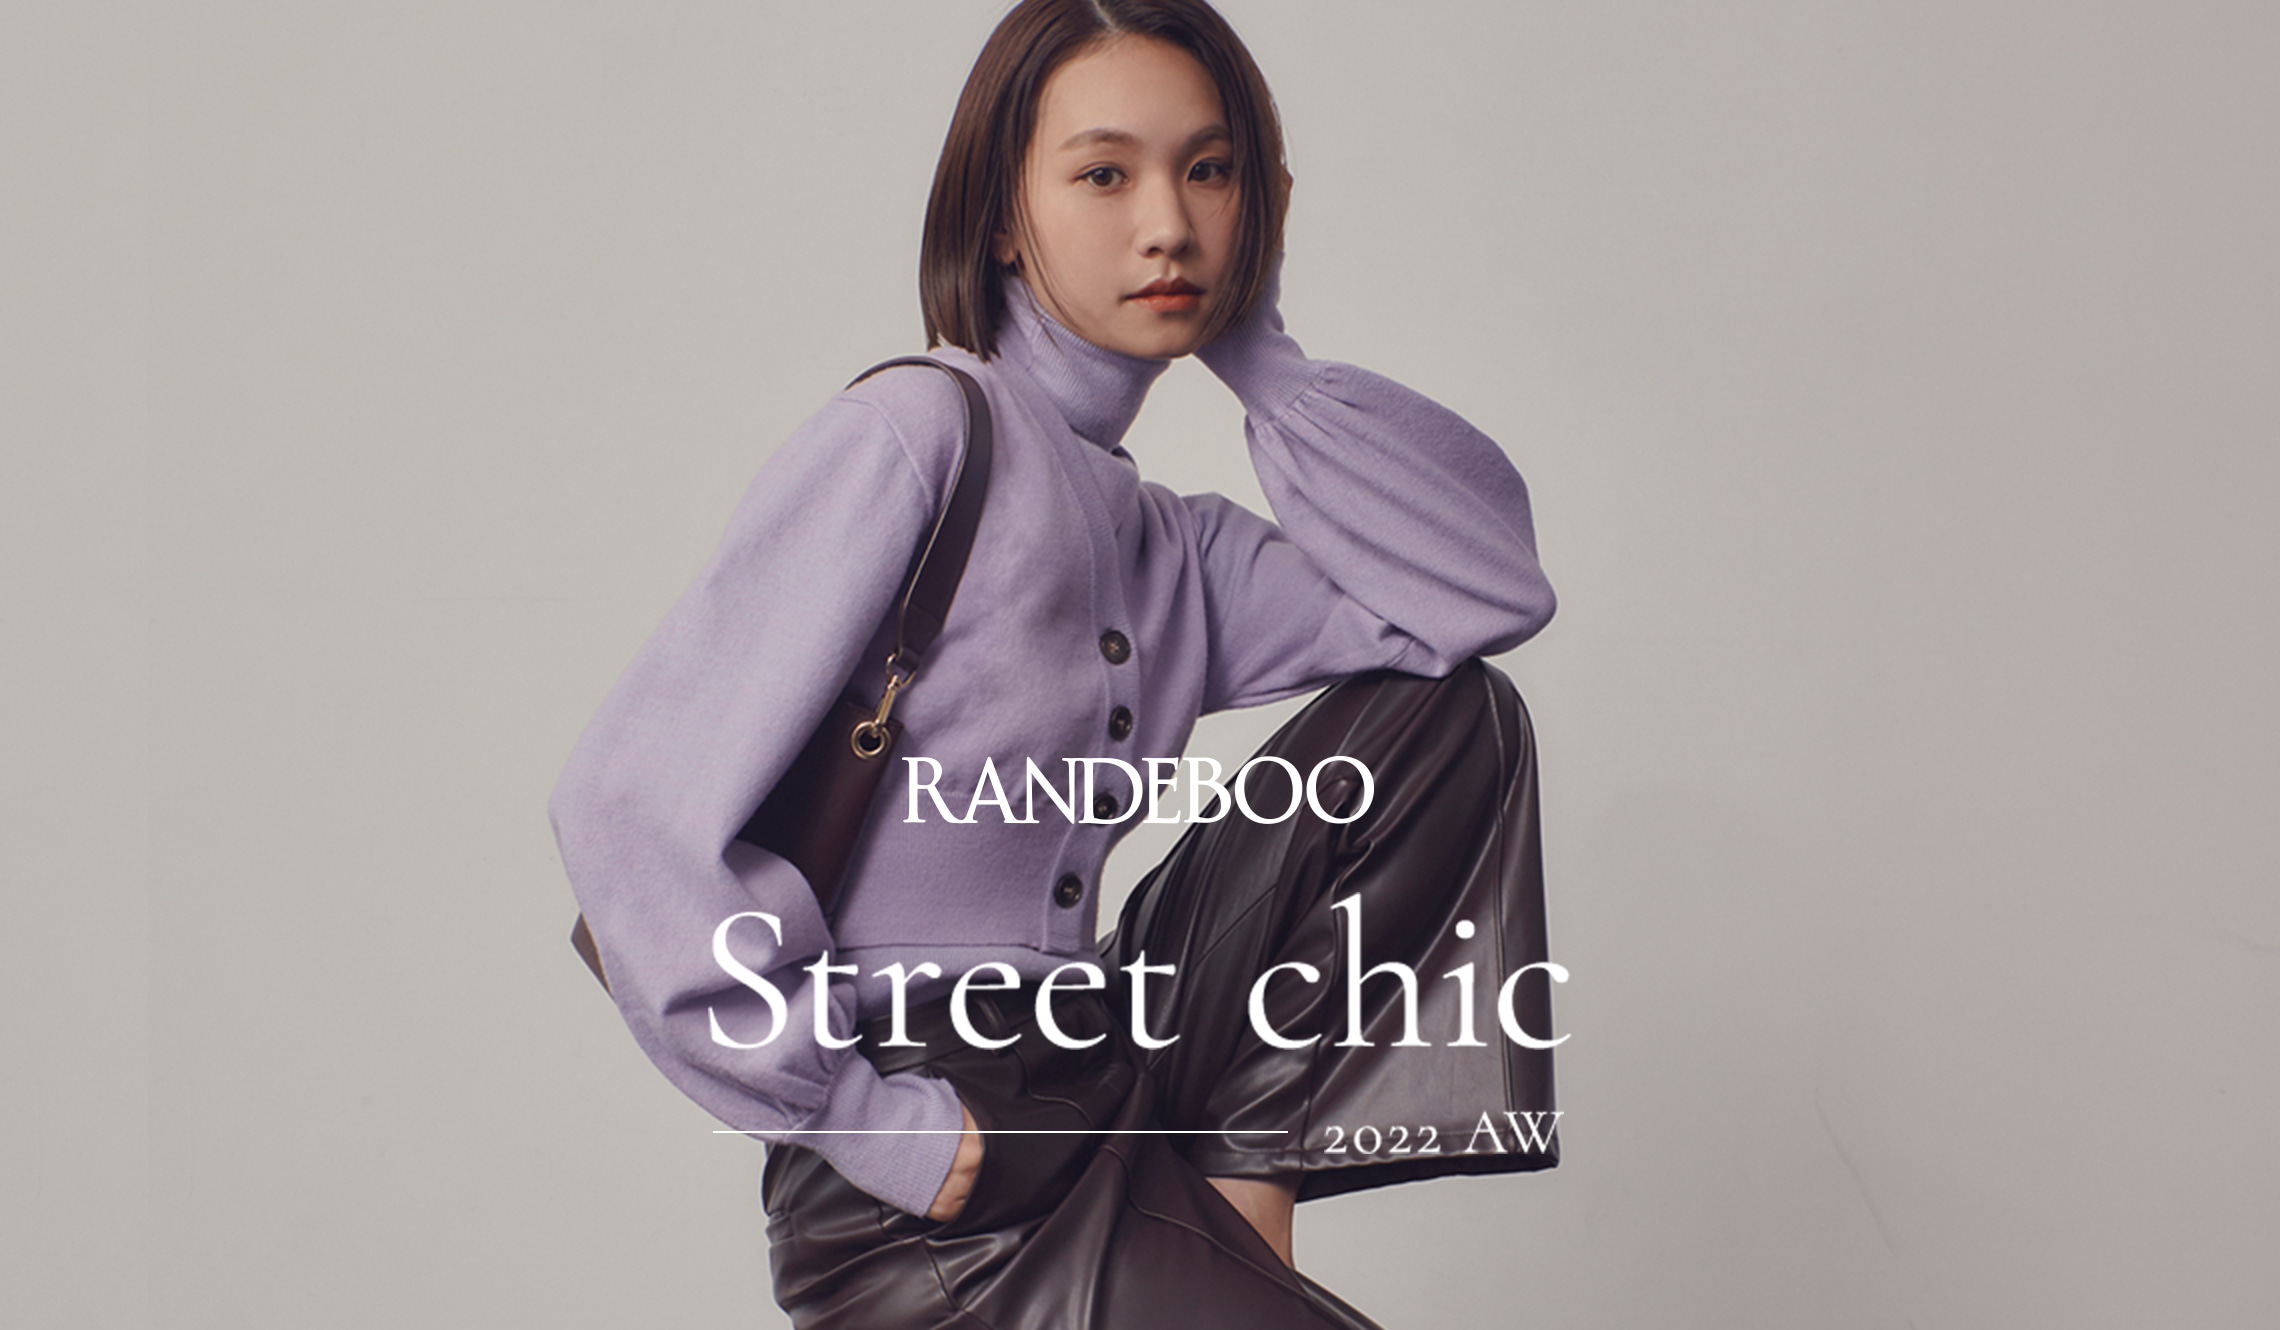 RANDEBOO Street chic 2022 AW